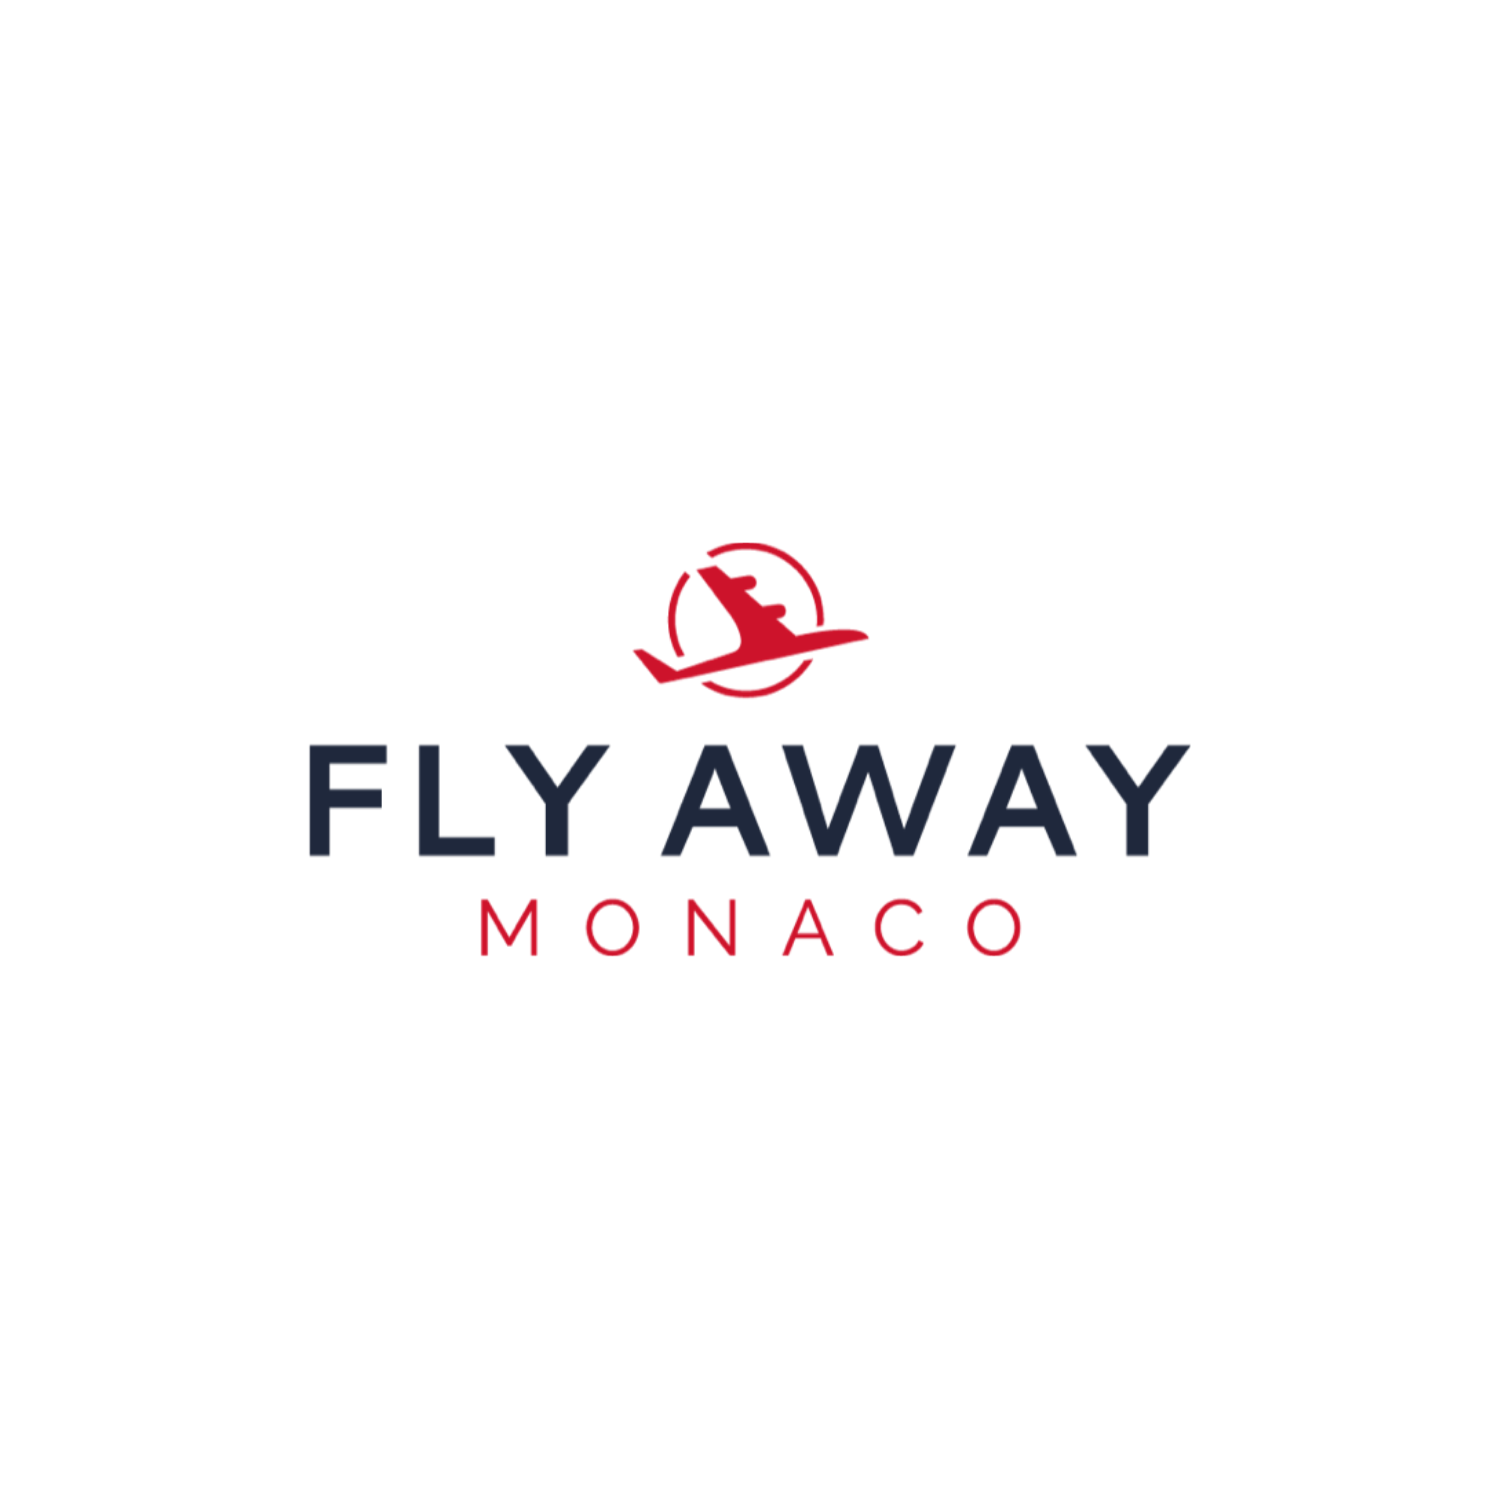 servicio-comercial-de-la-aplicación-de-mónaco-carlo-fly-away